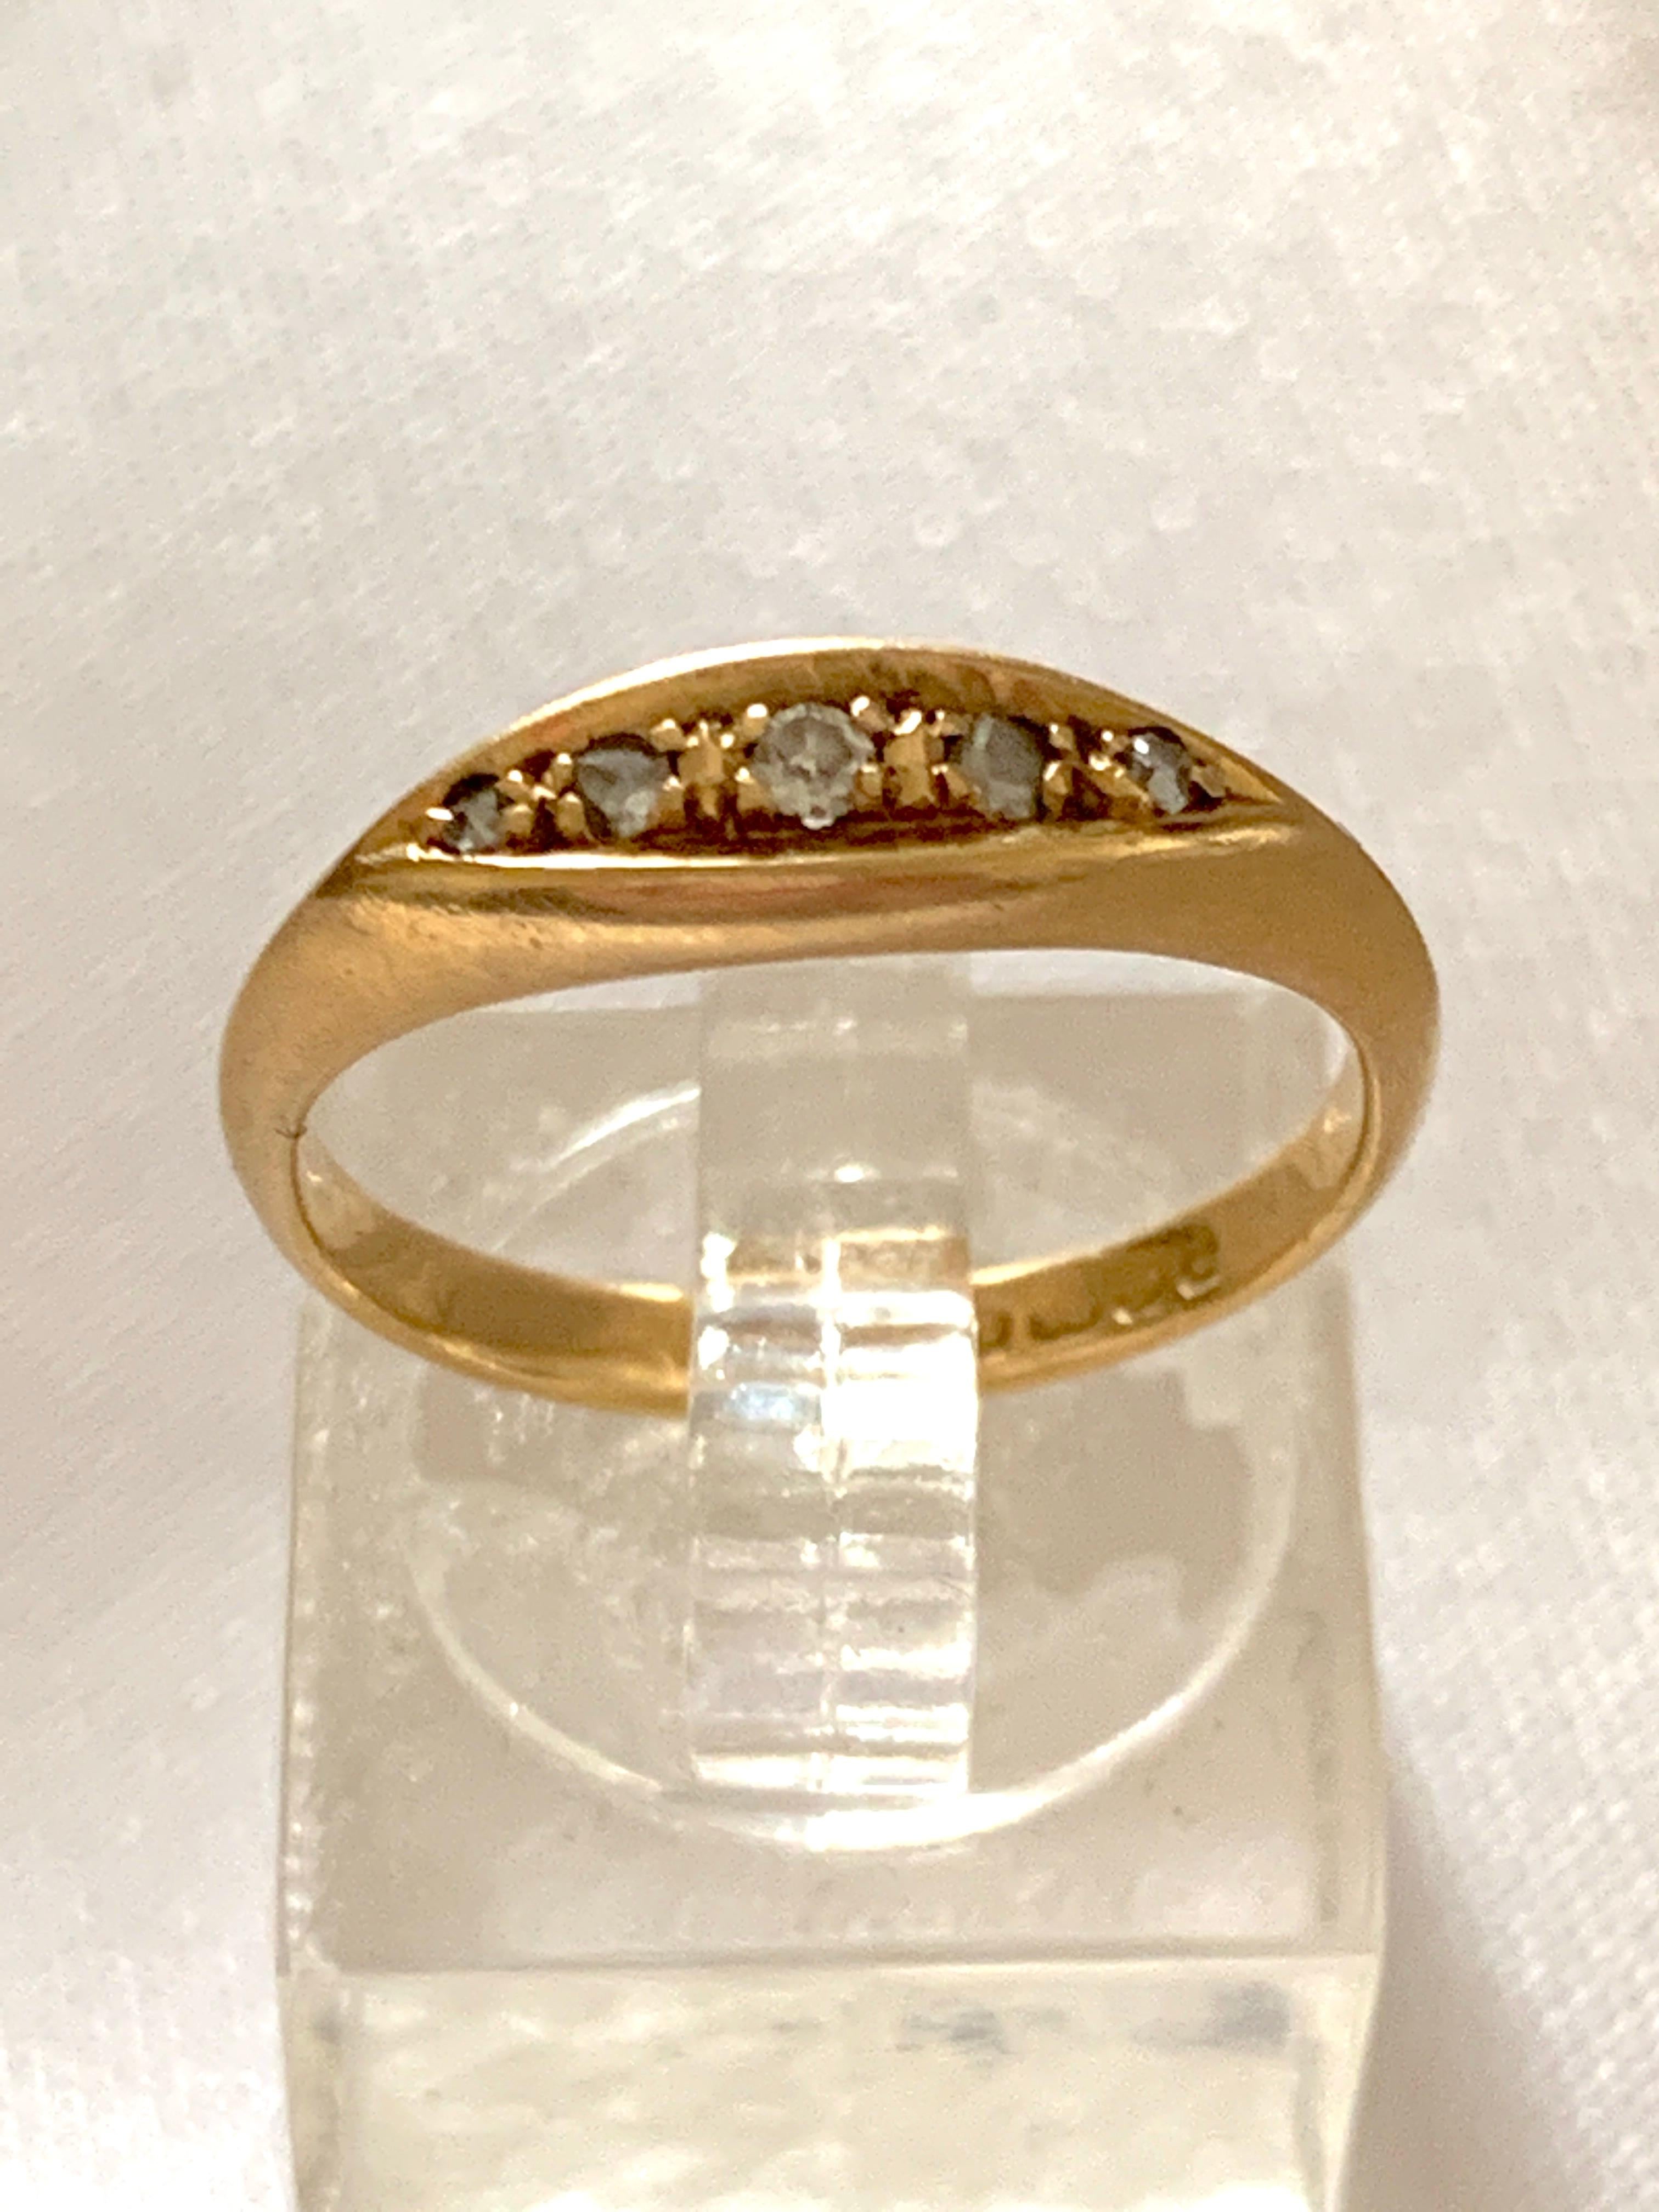 Antique Edwardian 18ct Gold diamond Ring
Fully Hallmarked
Crown, Birmingham Assay. 18 , and letter U - 1919
Old mine cut diamonds

Diamond surface diameters
1.15 mm x 2 = 0.015 x 2 = 0.03   Carat
1.75 mm x 2 = 0.020 x 2 = 0.04   Carat
2.15 mm x 1 =